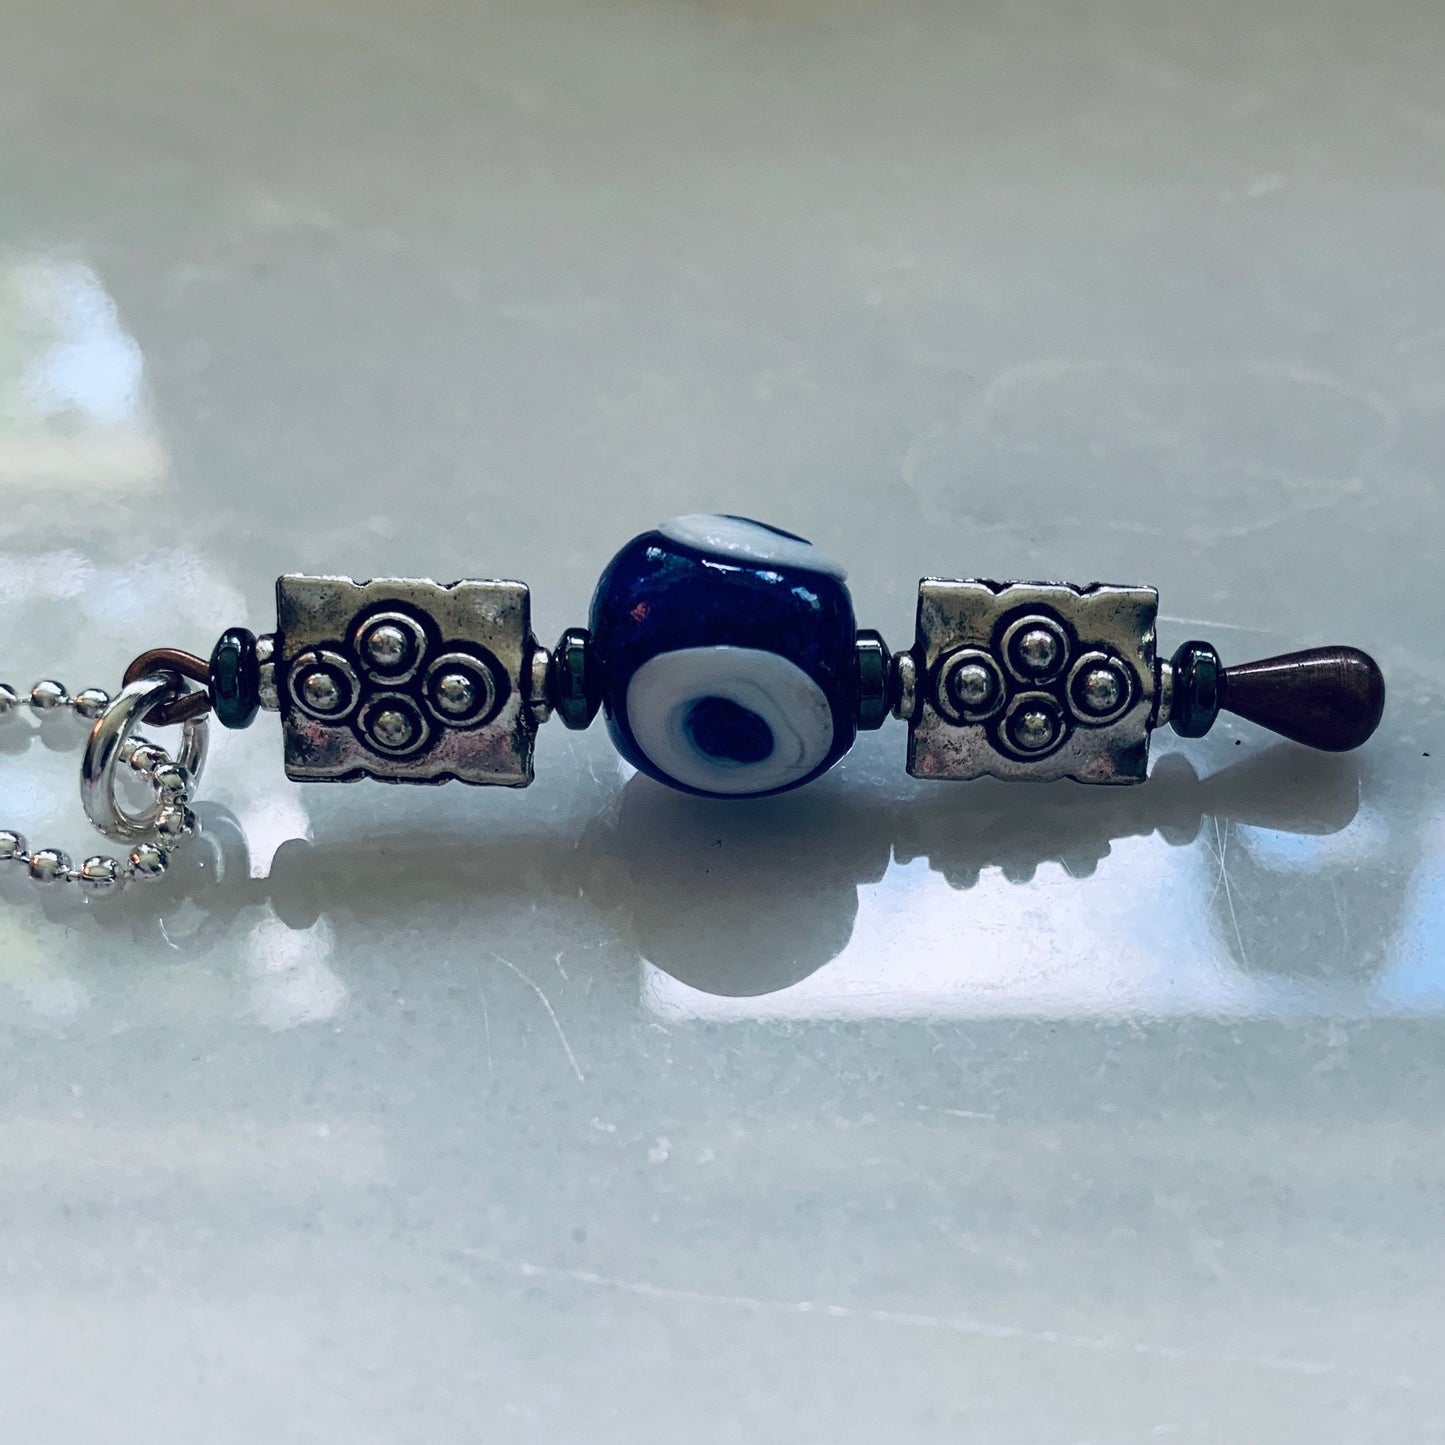 SariBlue® Tribal Pendant - Handmade Blue Glass Evil Eye Bead Necklace